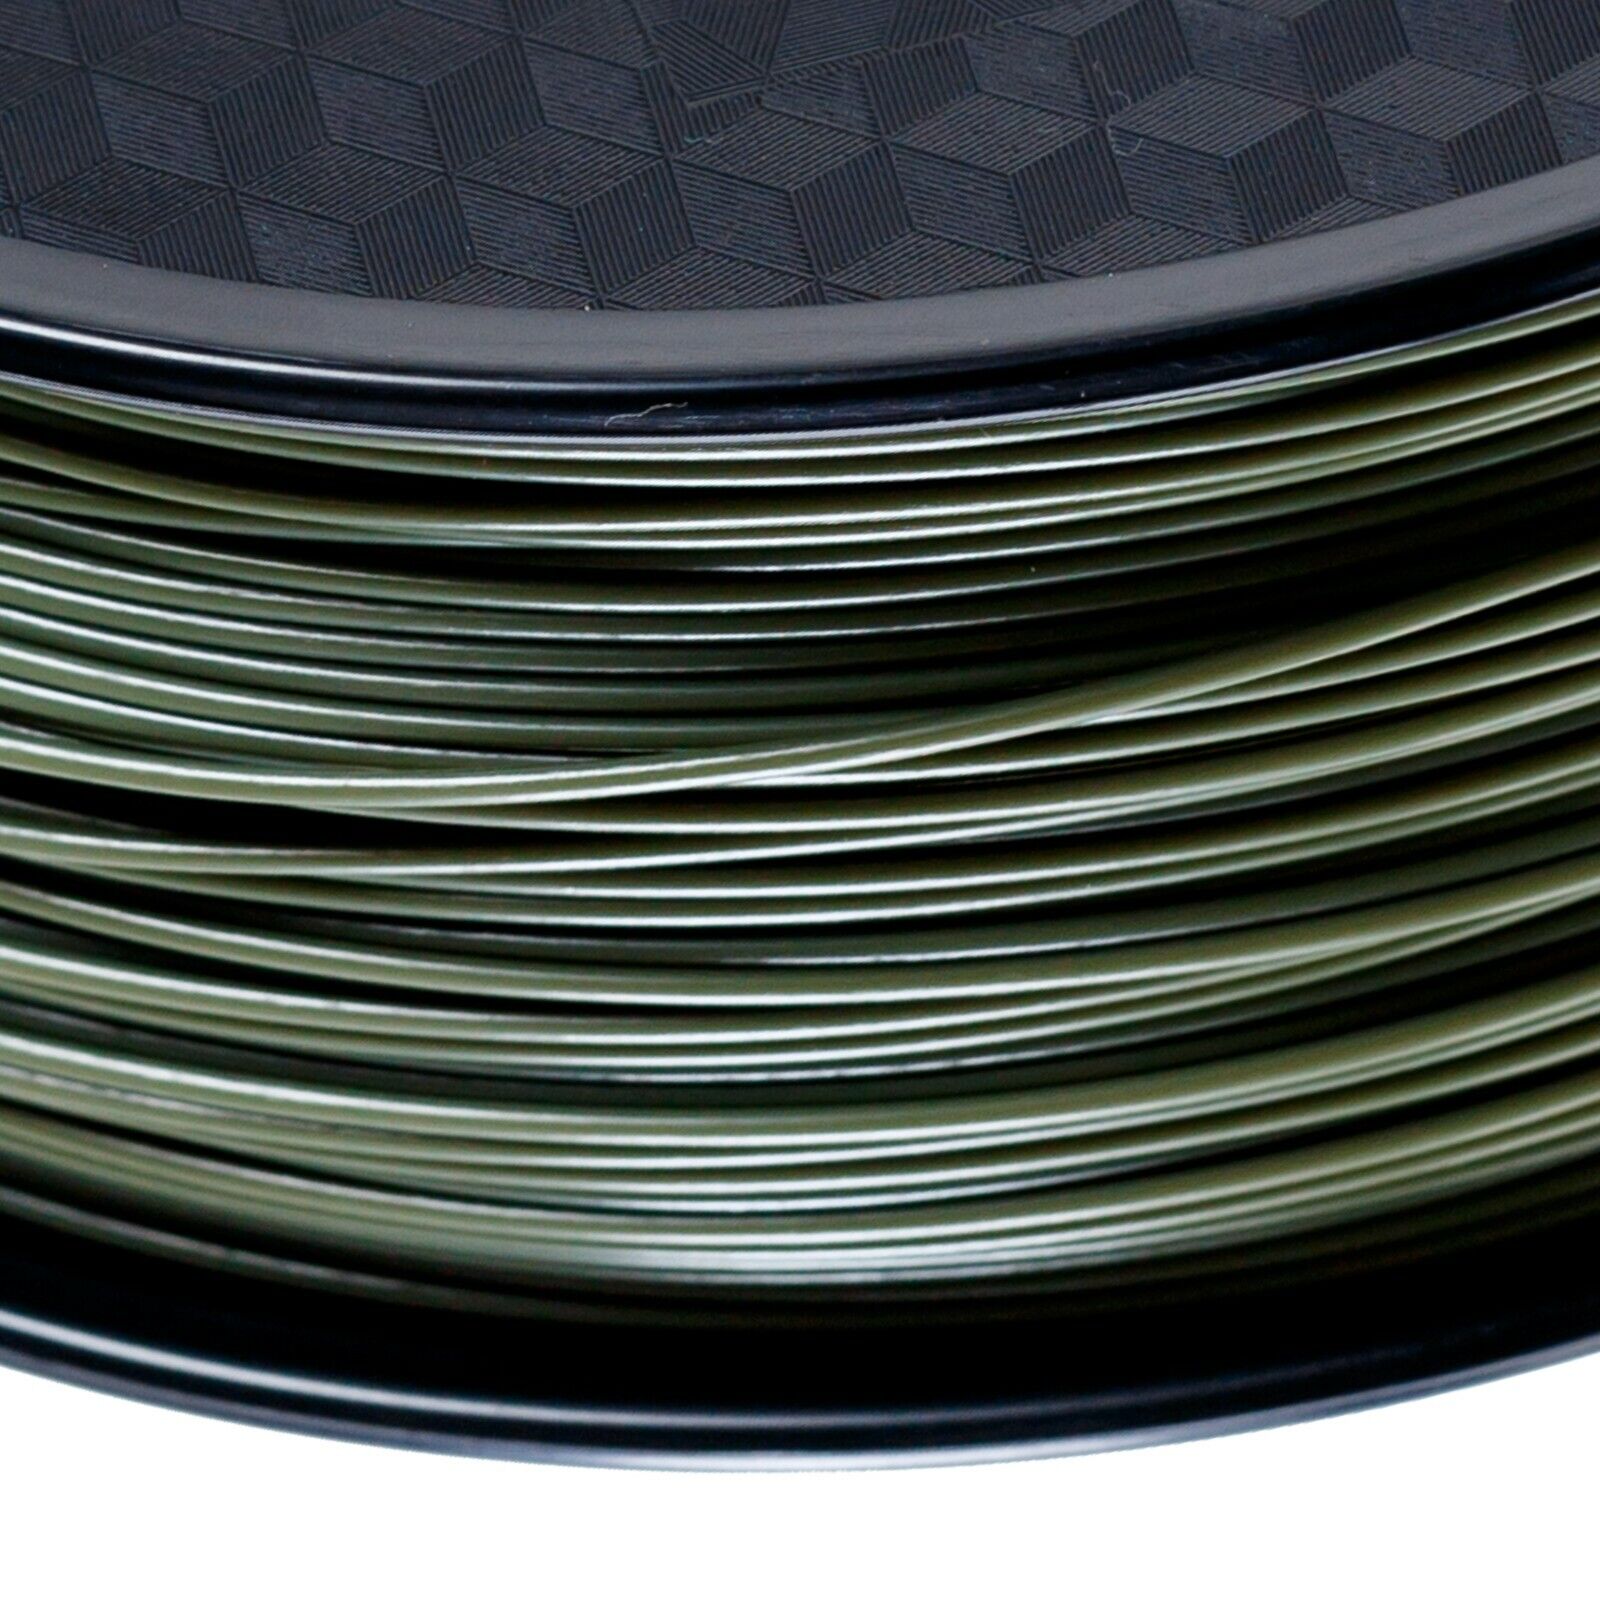 Paramount 3D ABS (Military Green) 1.75mm 1kg Filament [OGRL60037764A]